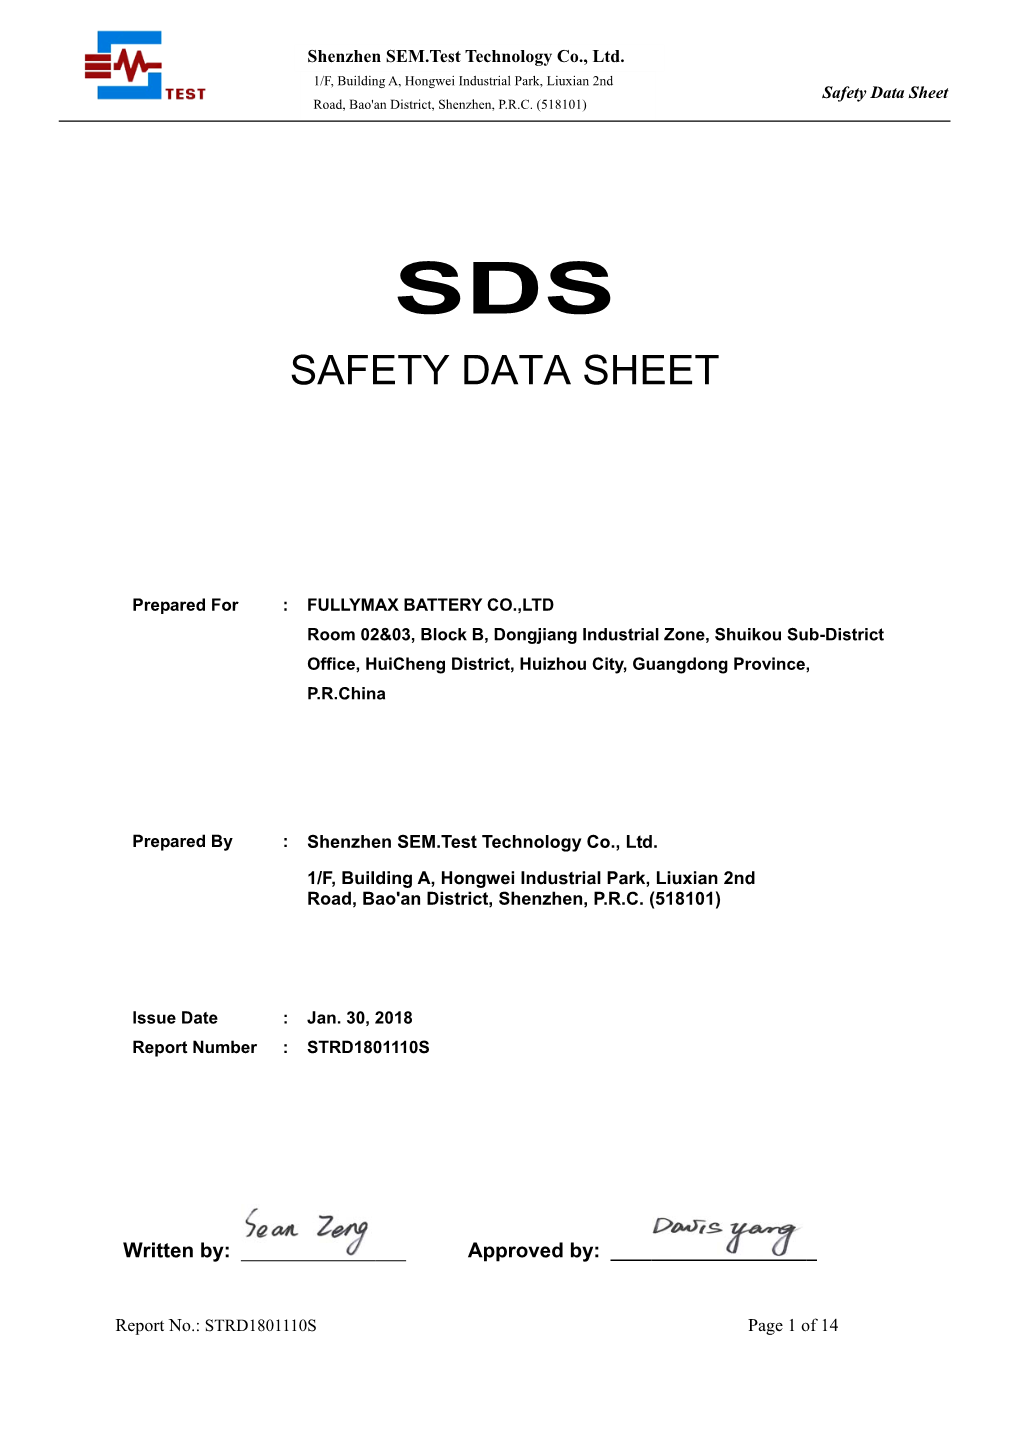 Safety Data Sheet Road, Bao'an District, Shenzhen, P.R.C